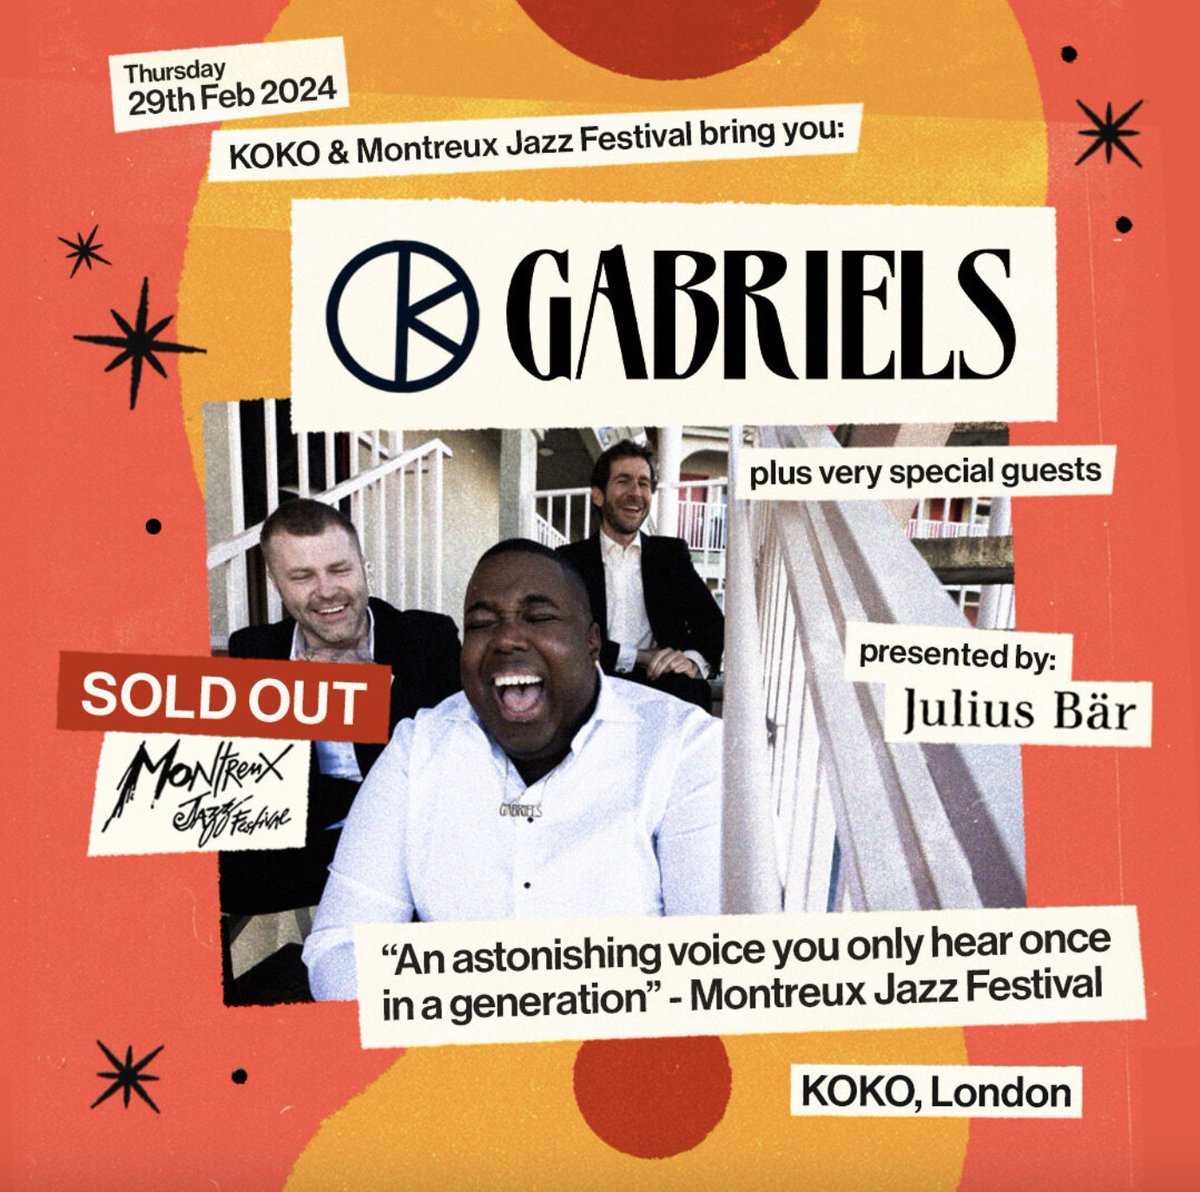 SET-TIMES for tonight's @___gabriels performance at #KOKO: 19:00 - Doors 20:00 - Special Guest Support 21:00 - Gabriels 23:00 - Curfew #Gabriels #KOKOLondon #JuliusBar #Montreuxjazzfestival